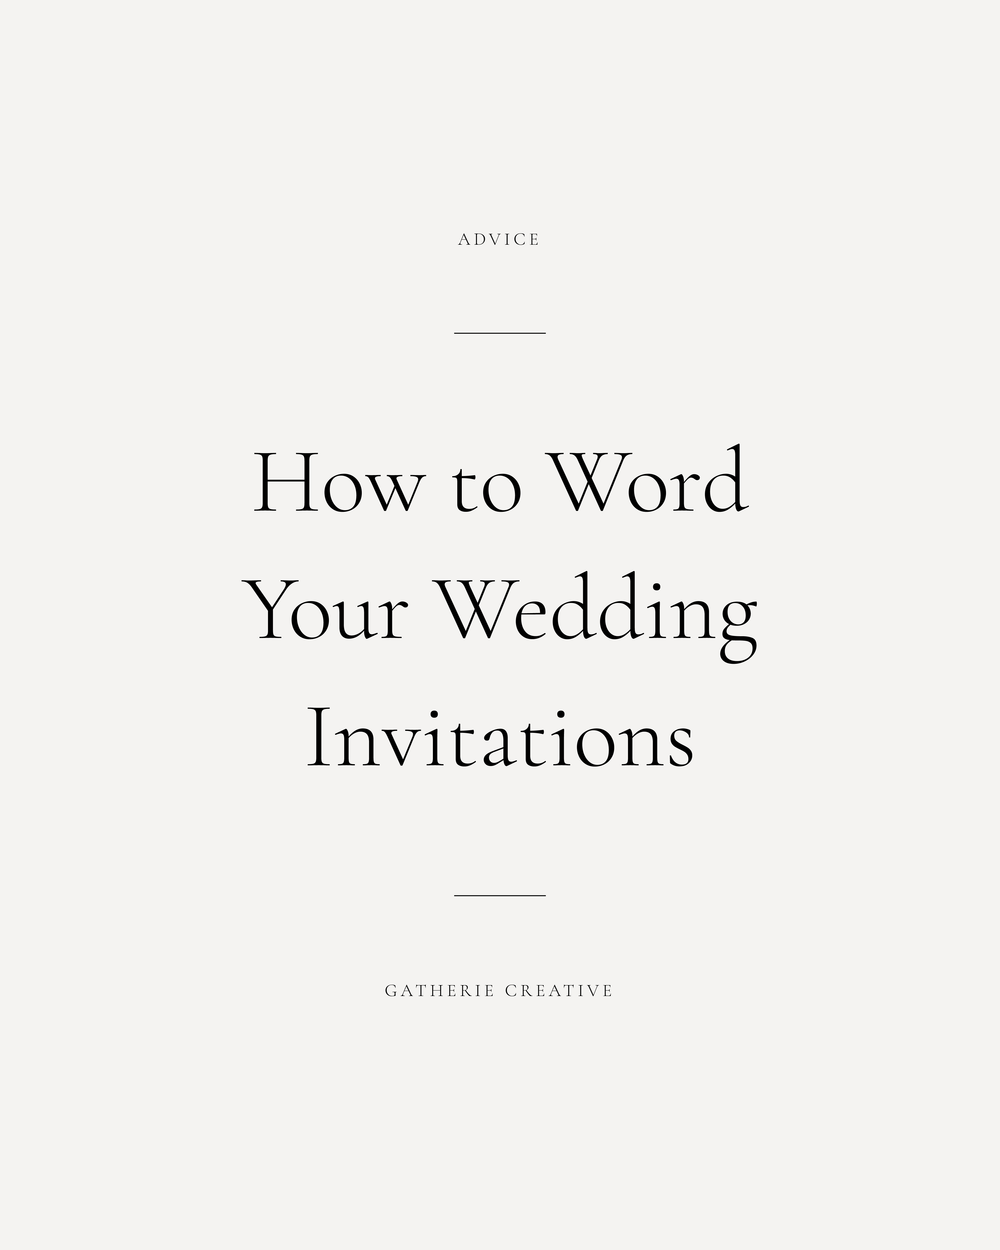 Gatherie Creative — WEDDING INVITATION WORDING ETIQUETTE